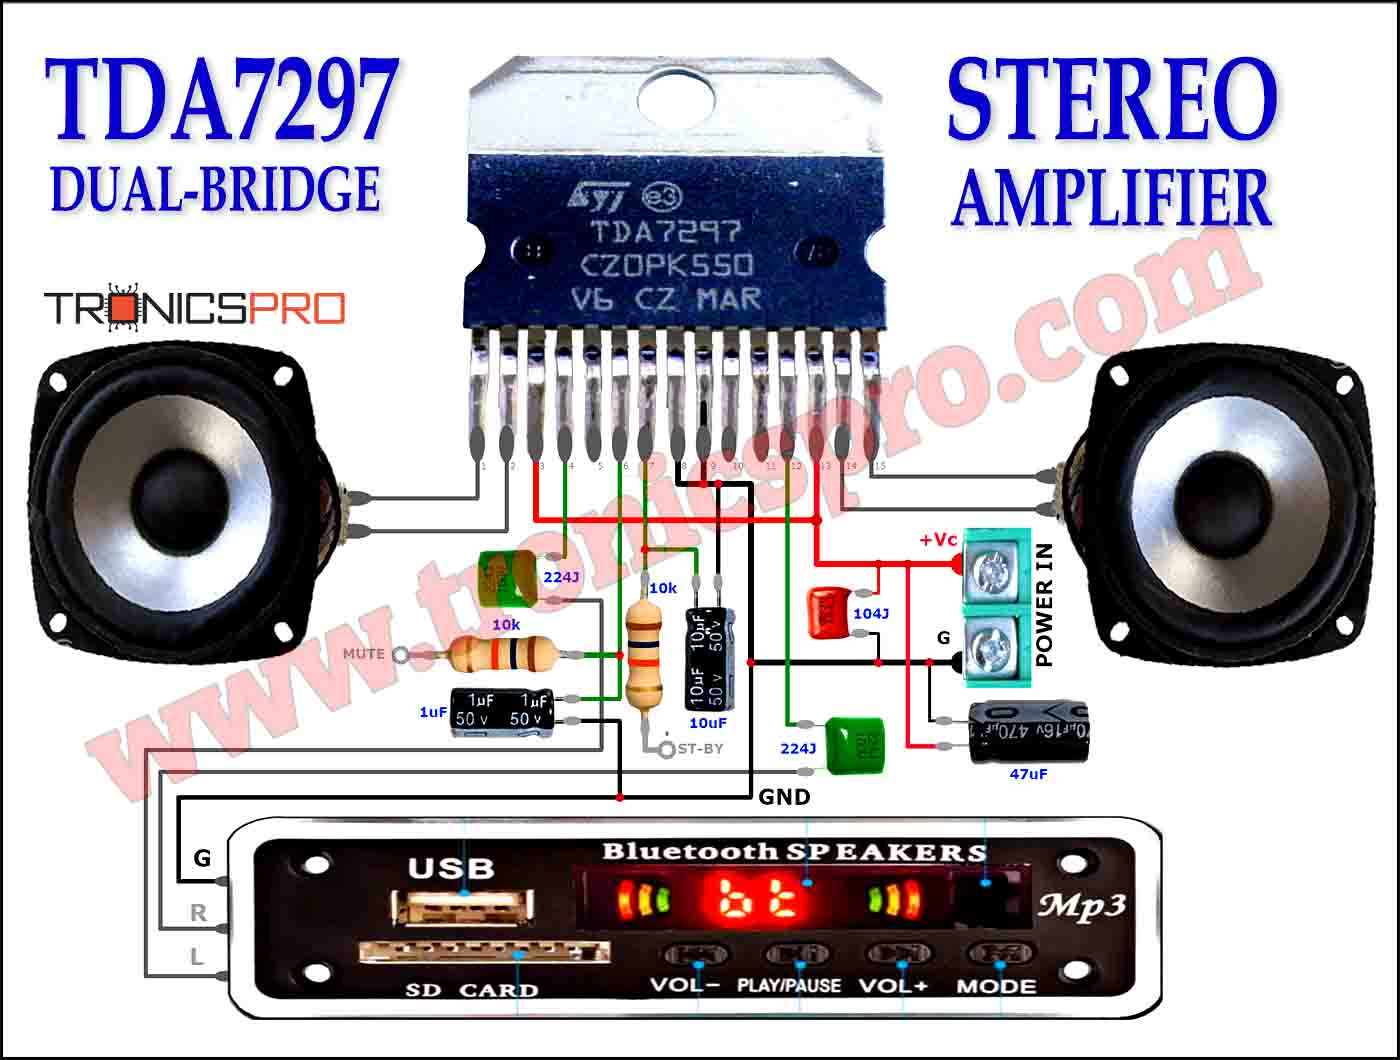 Stereo Amplifier TDA7297 Dual-Bridge Circuit Diagram